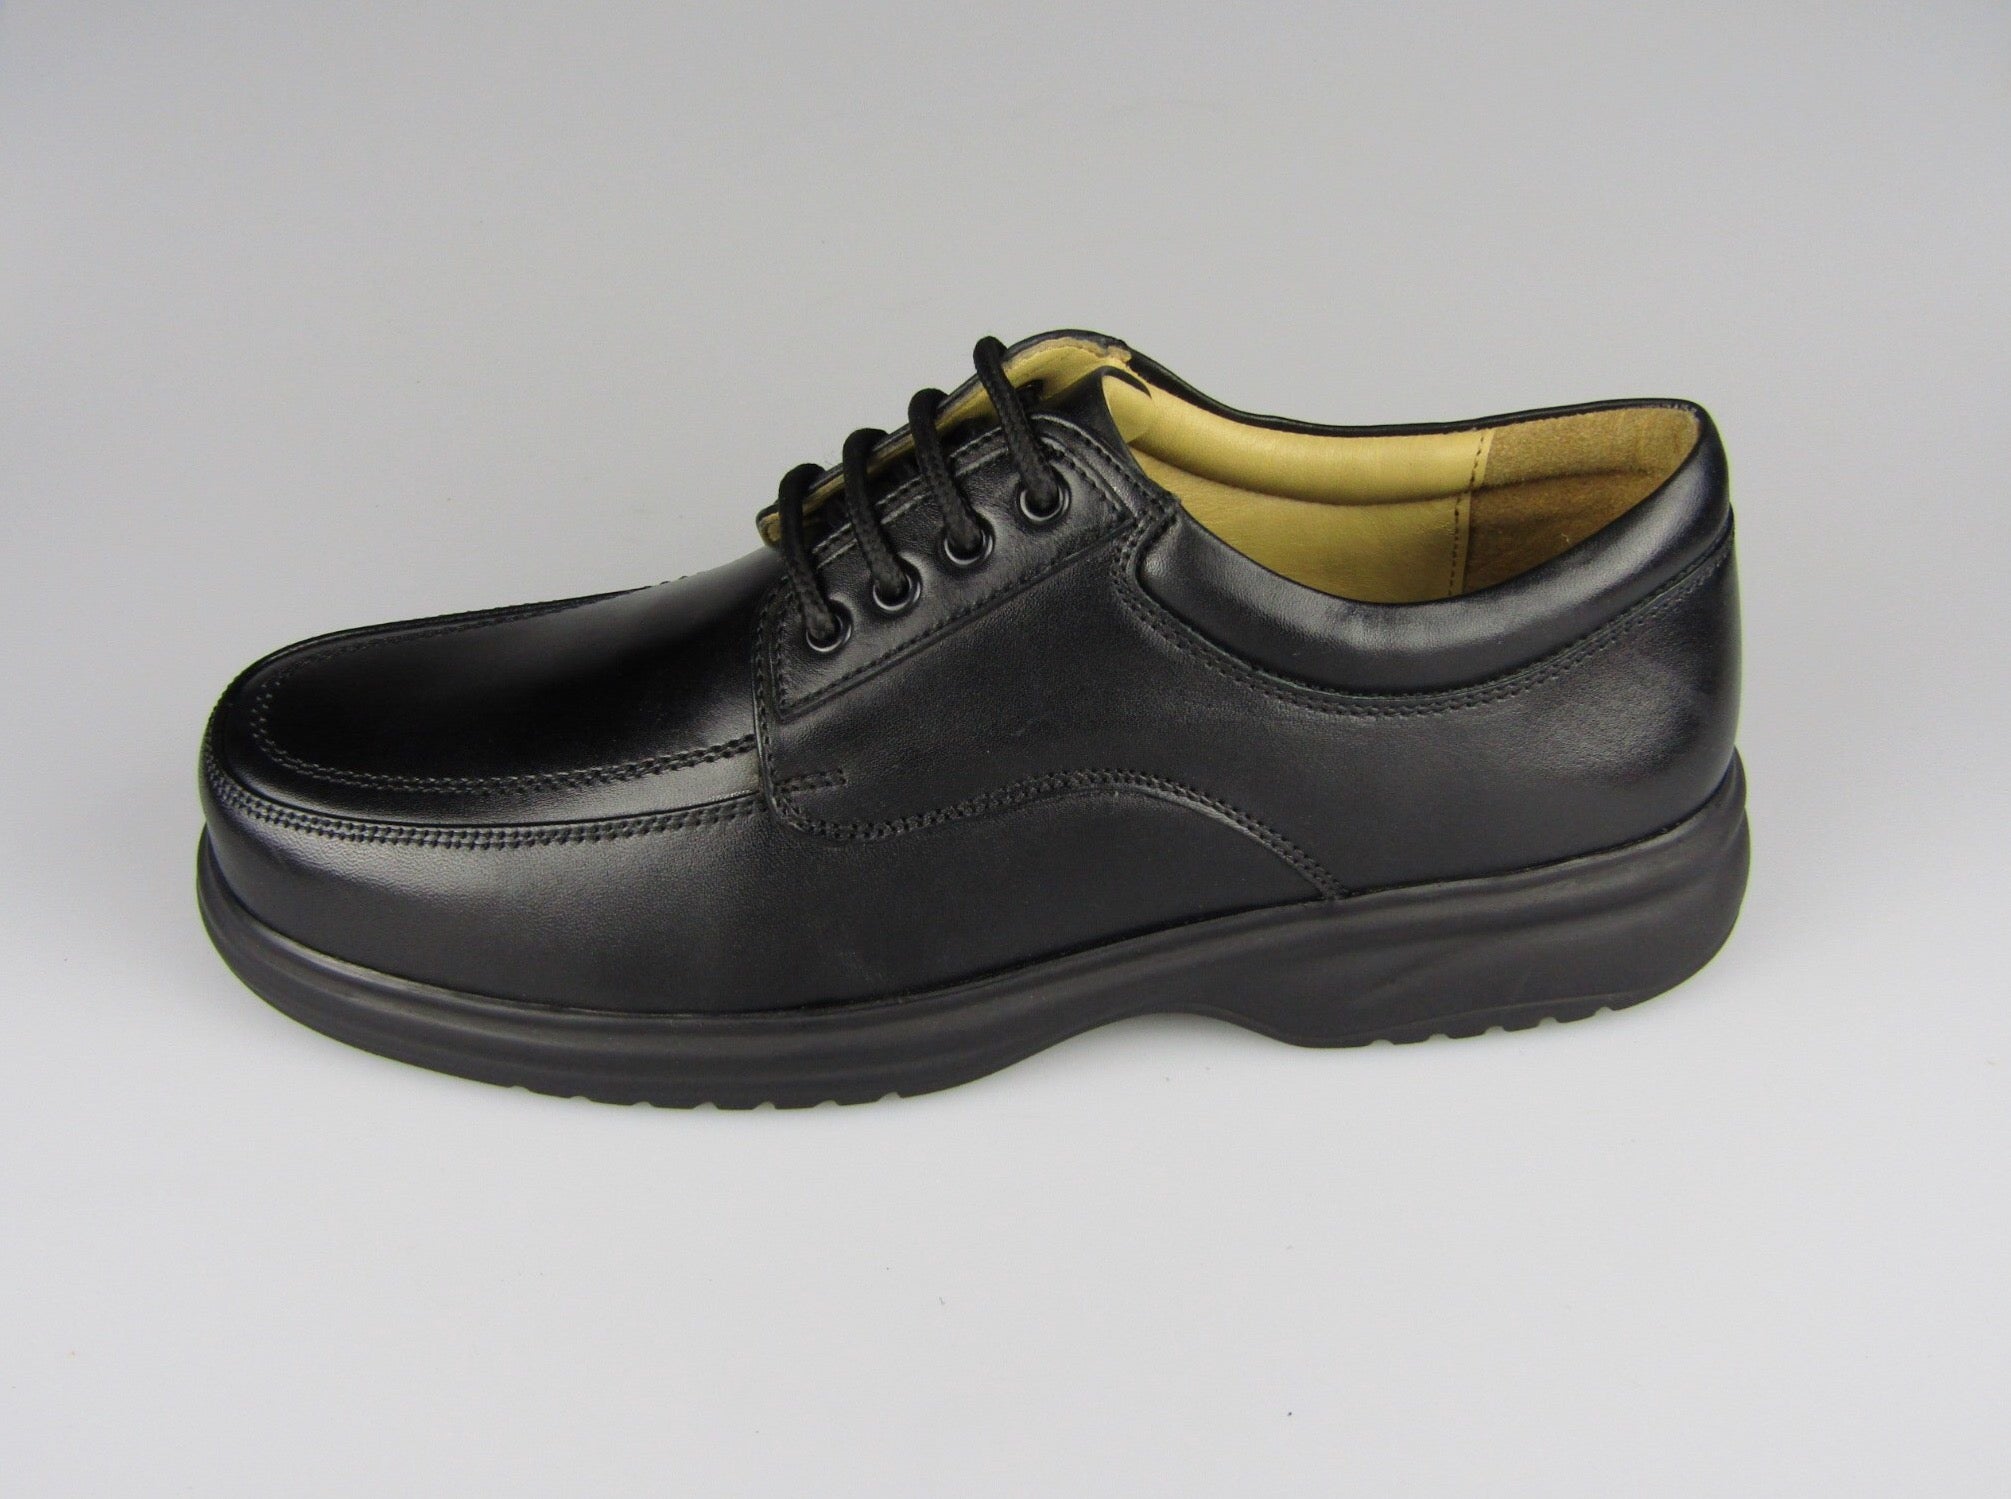 Roamers M706A – Discount Shoe Sales Limited